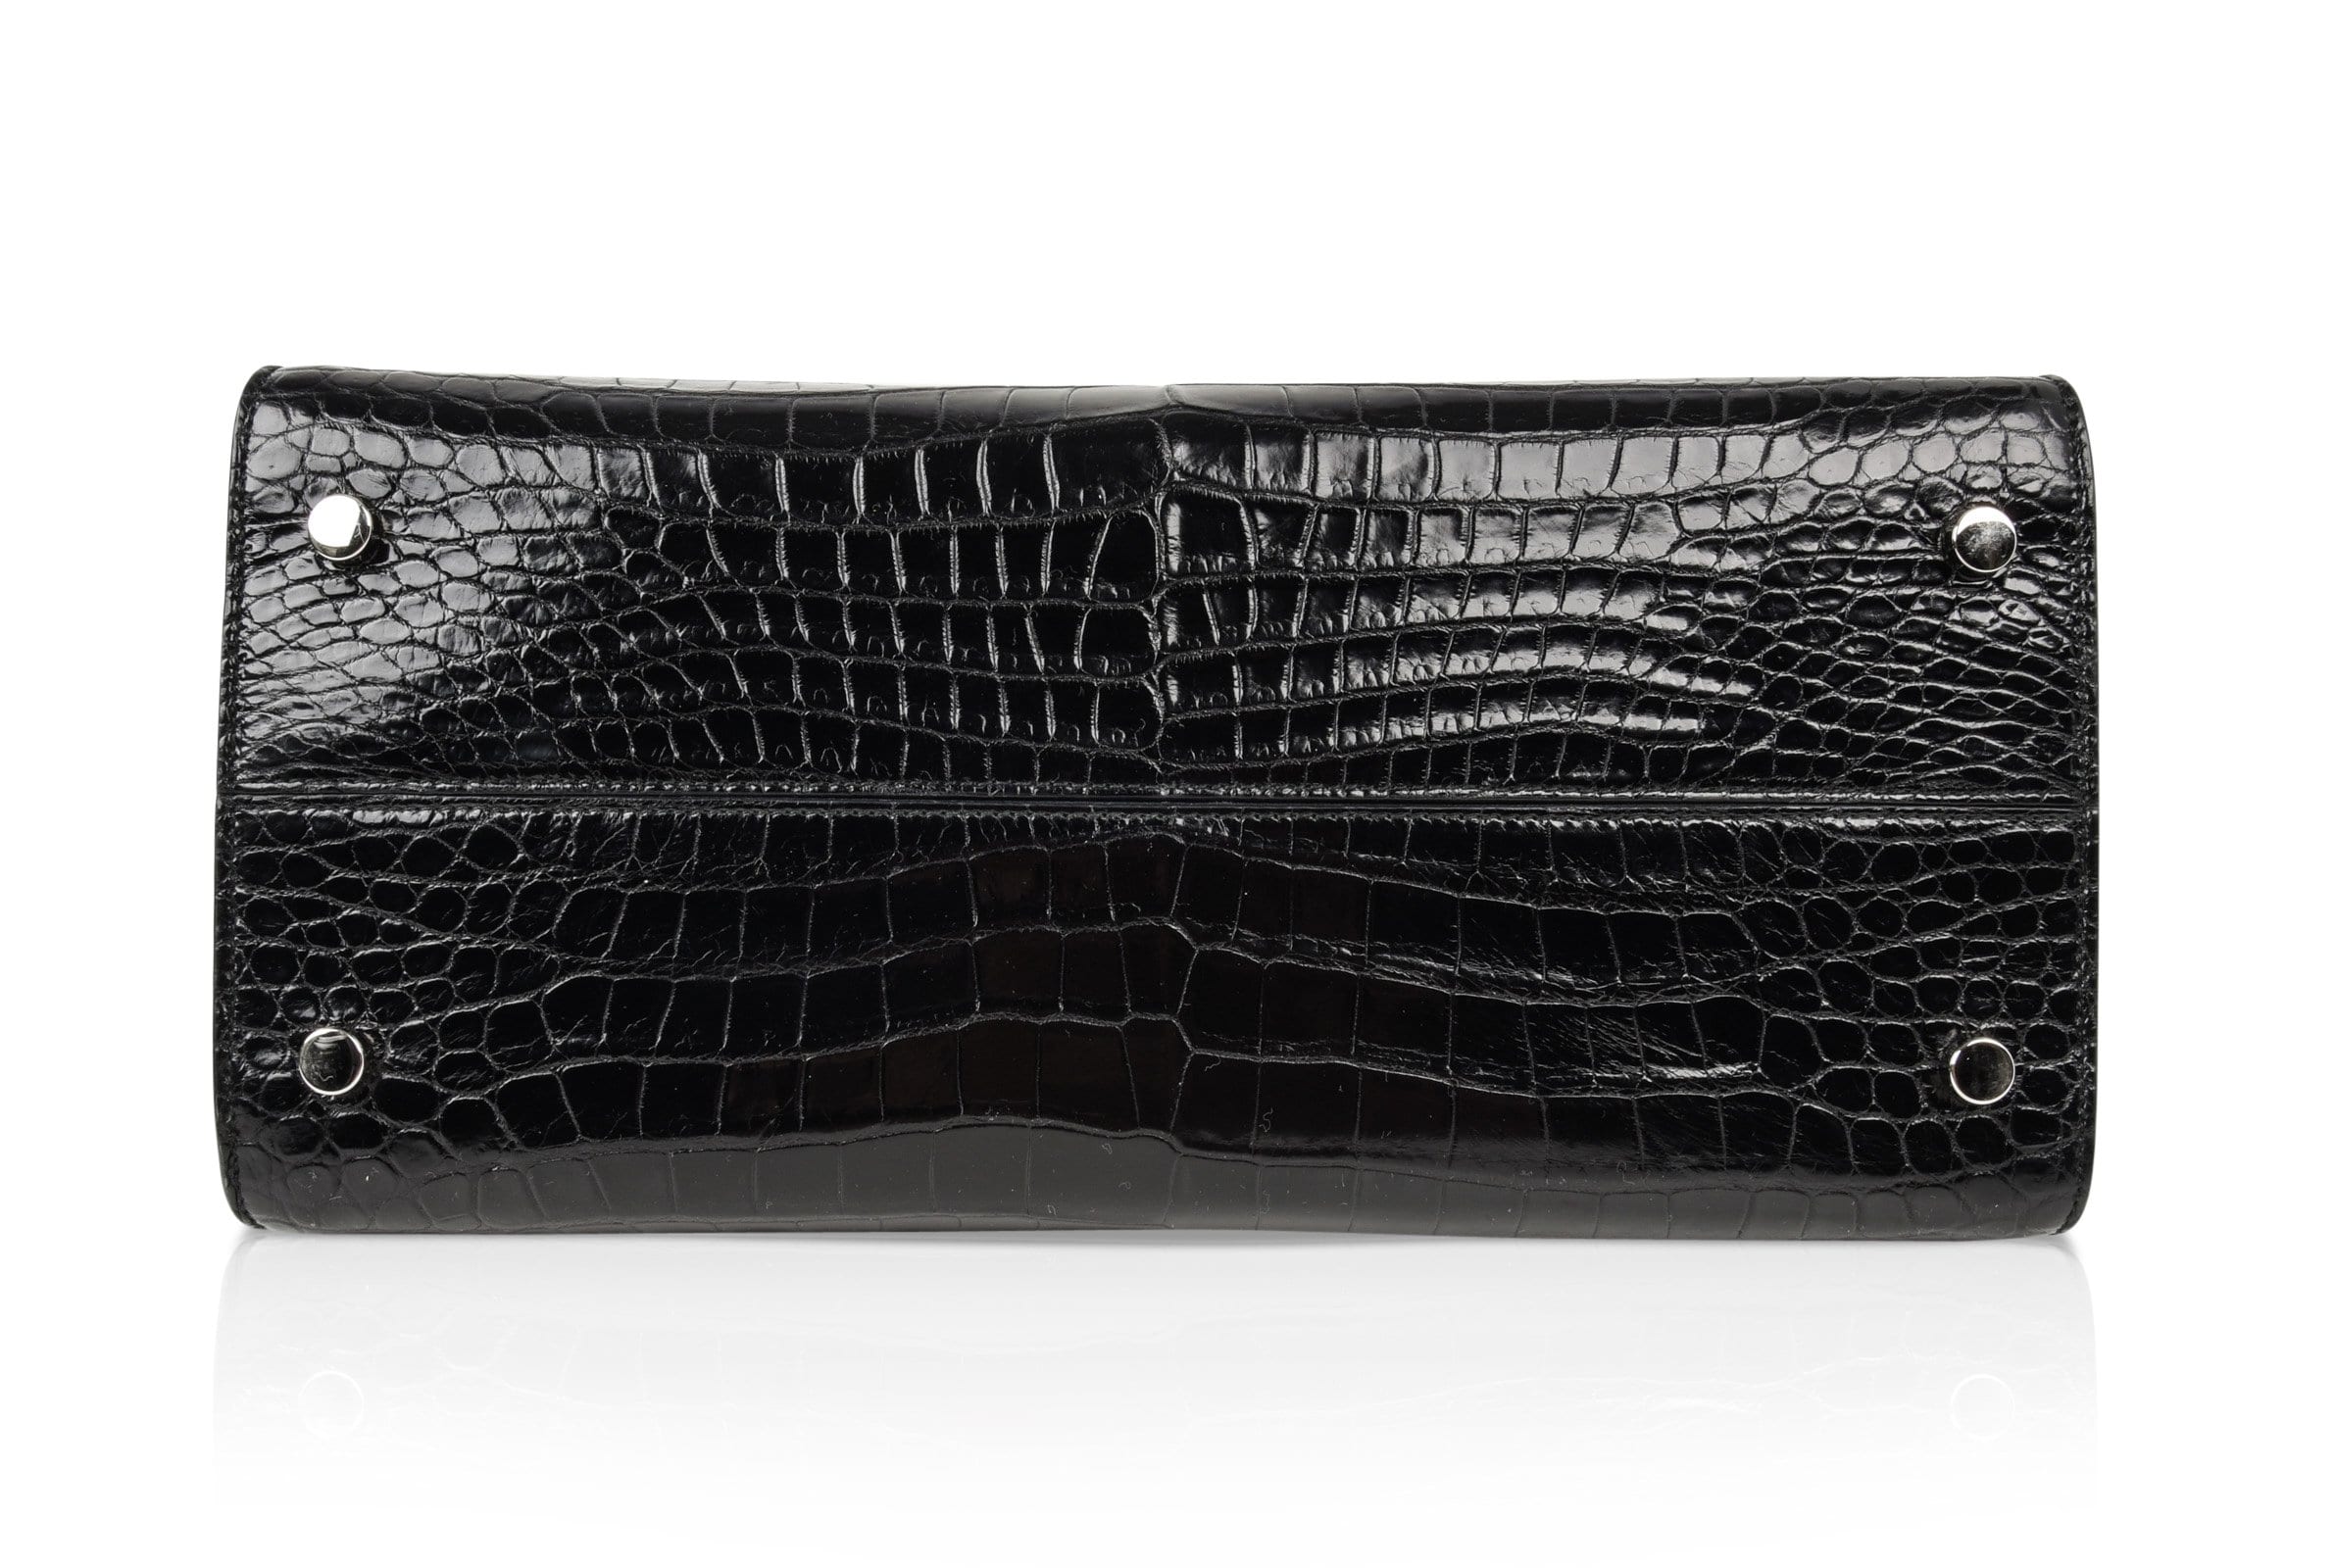  Women Alligator Print Top Handle Bag Embossed Crocodile Pattern  Handbag Tote Bag(Black) : Clothing, Shoes & Jewelry